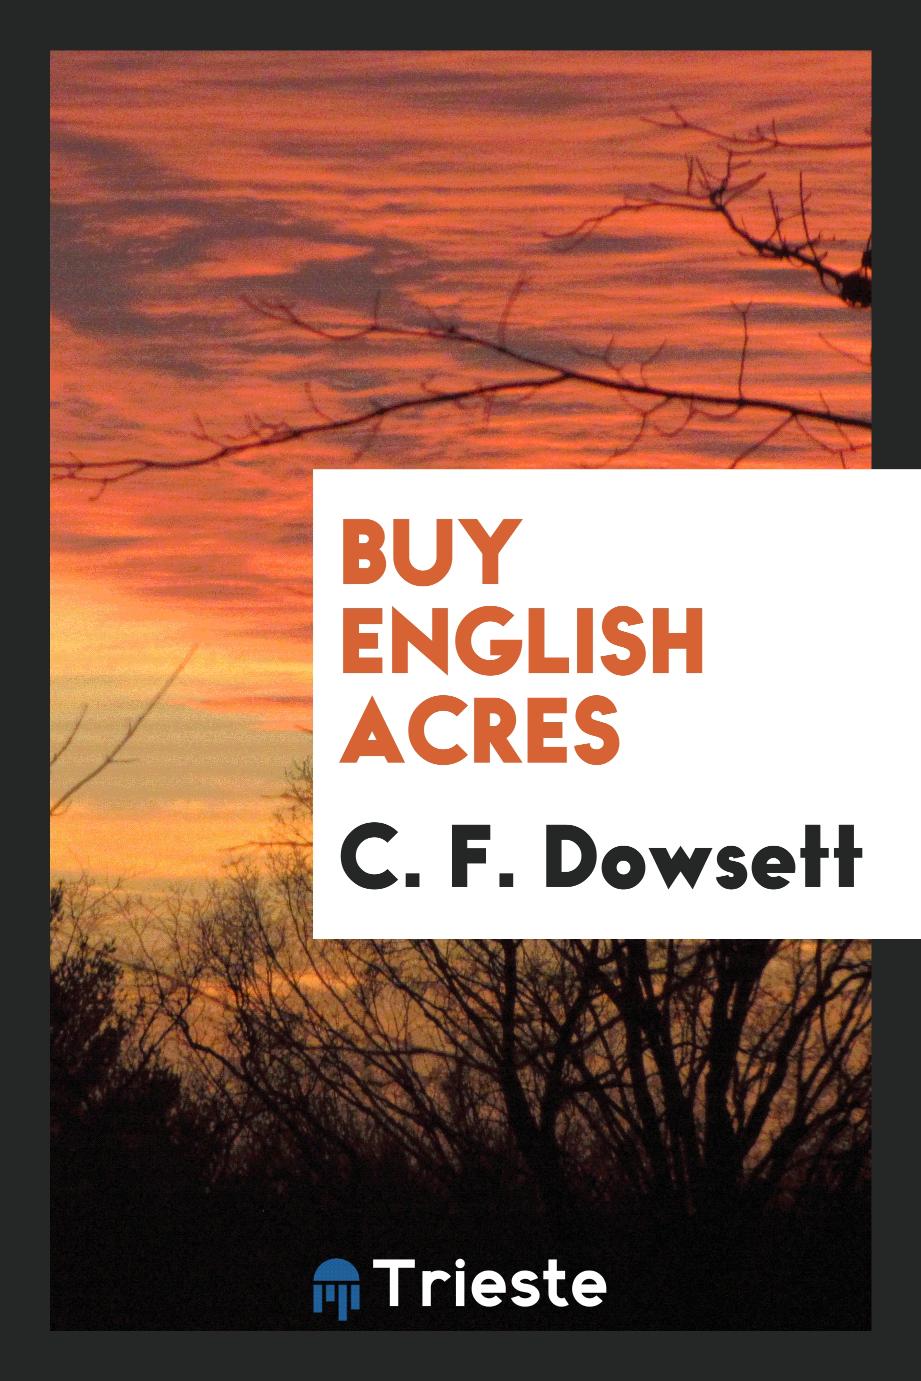 Buy English acres